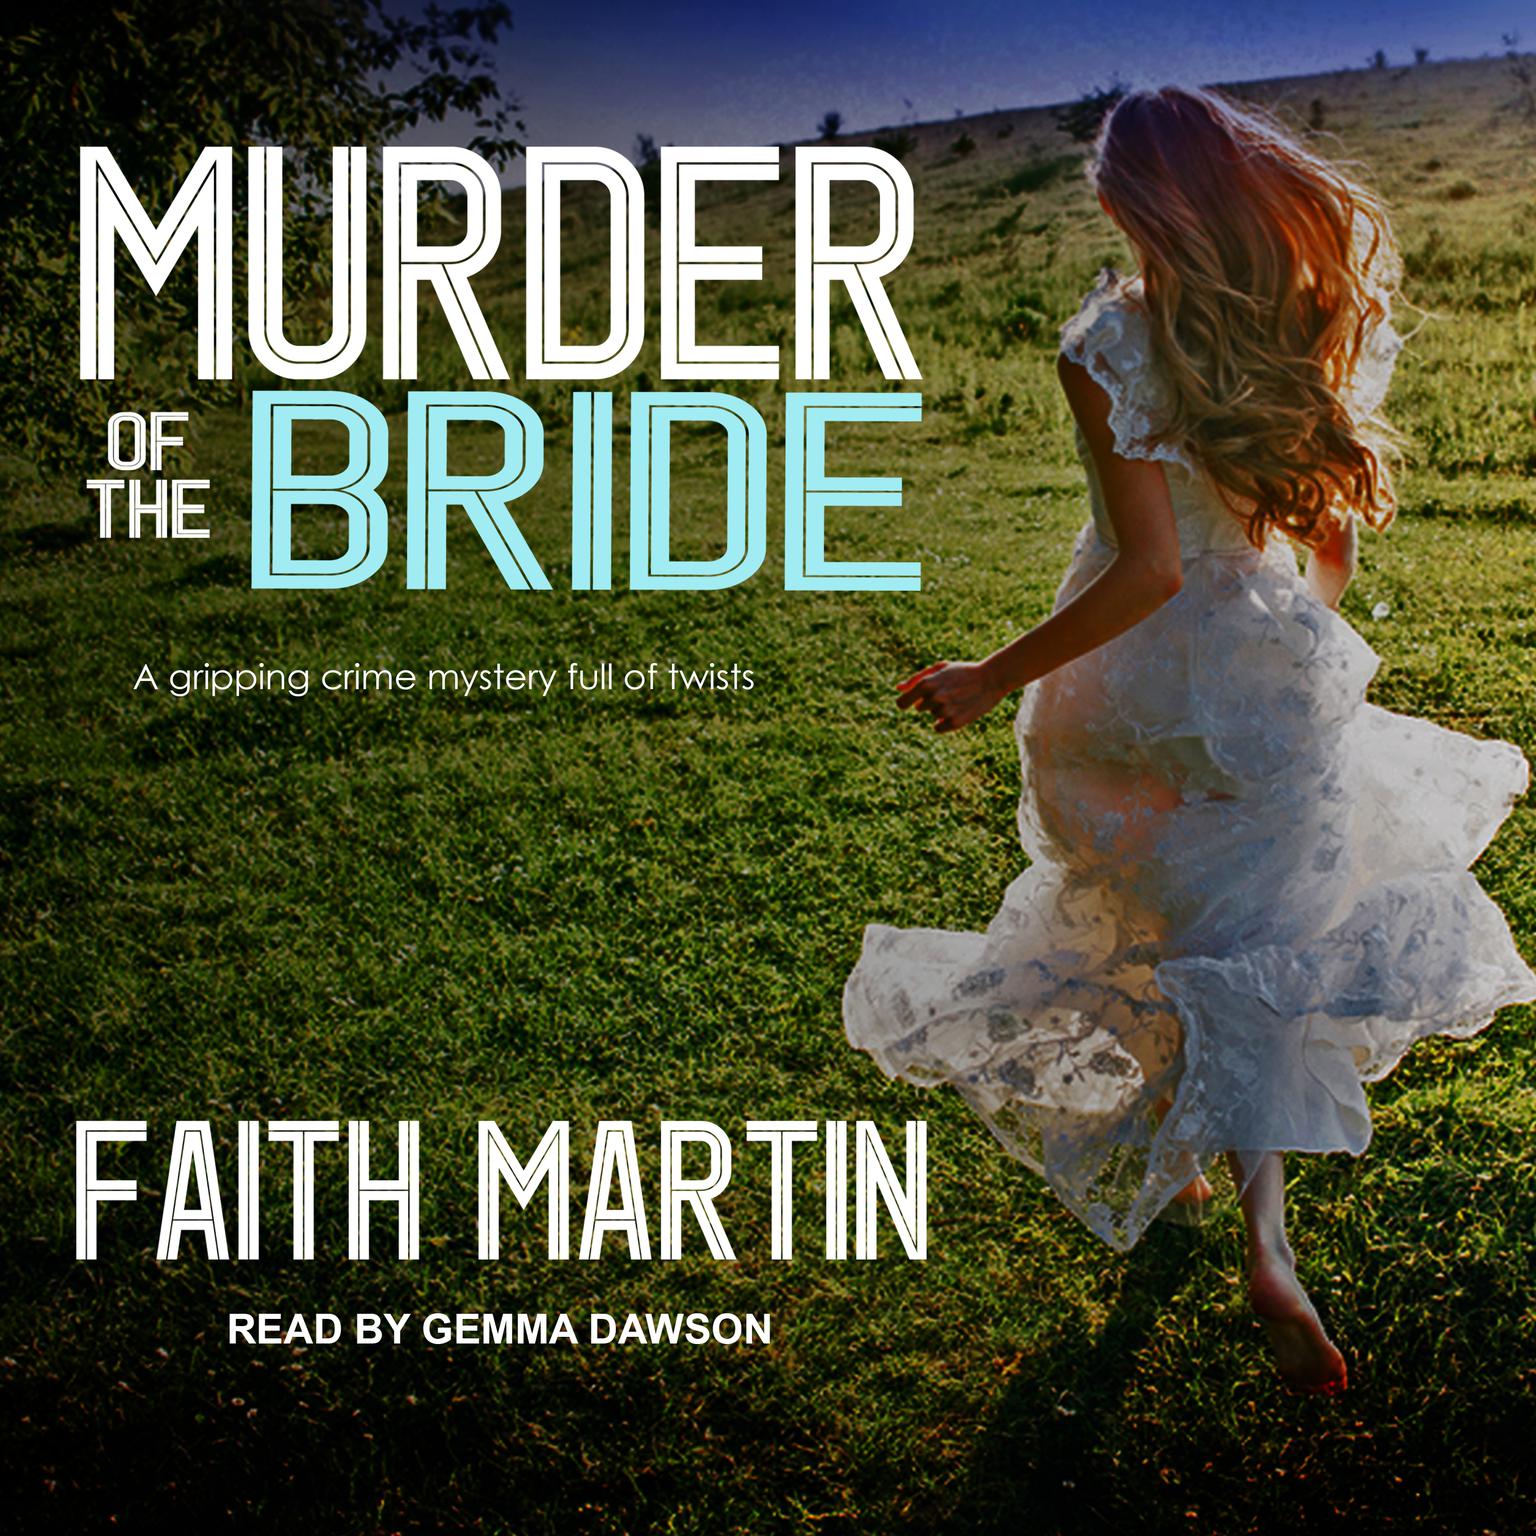 Murder of the Bride Audiobook, by Faith Martin